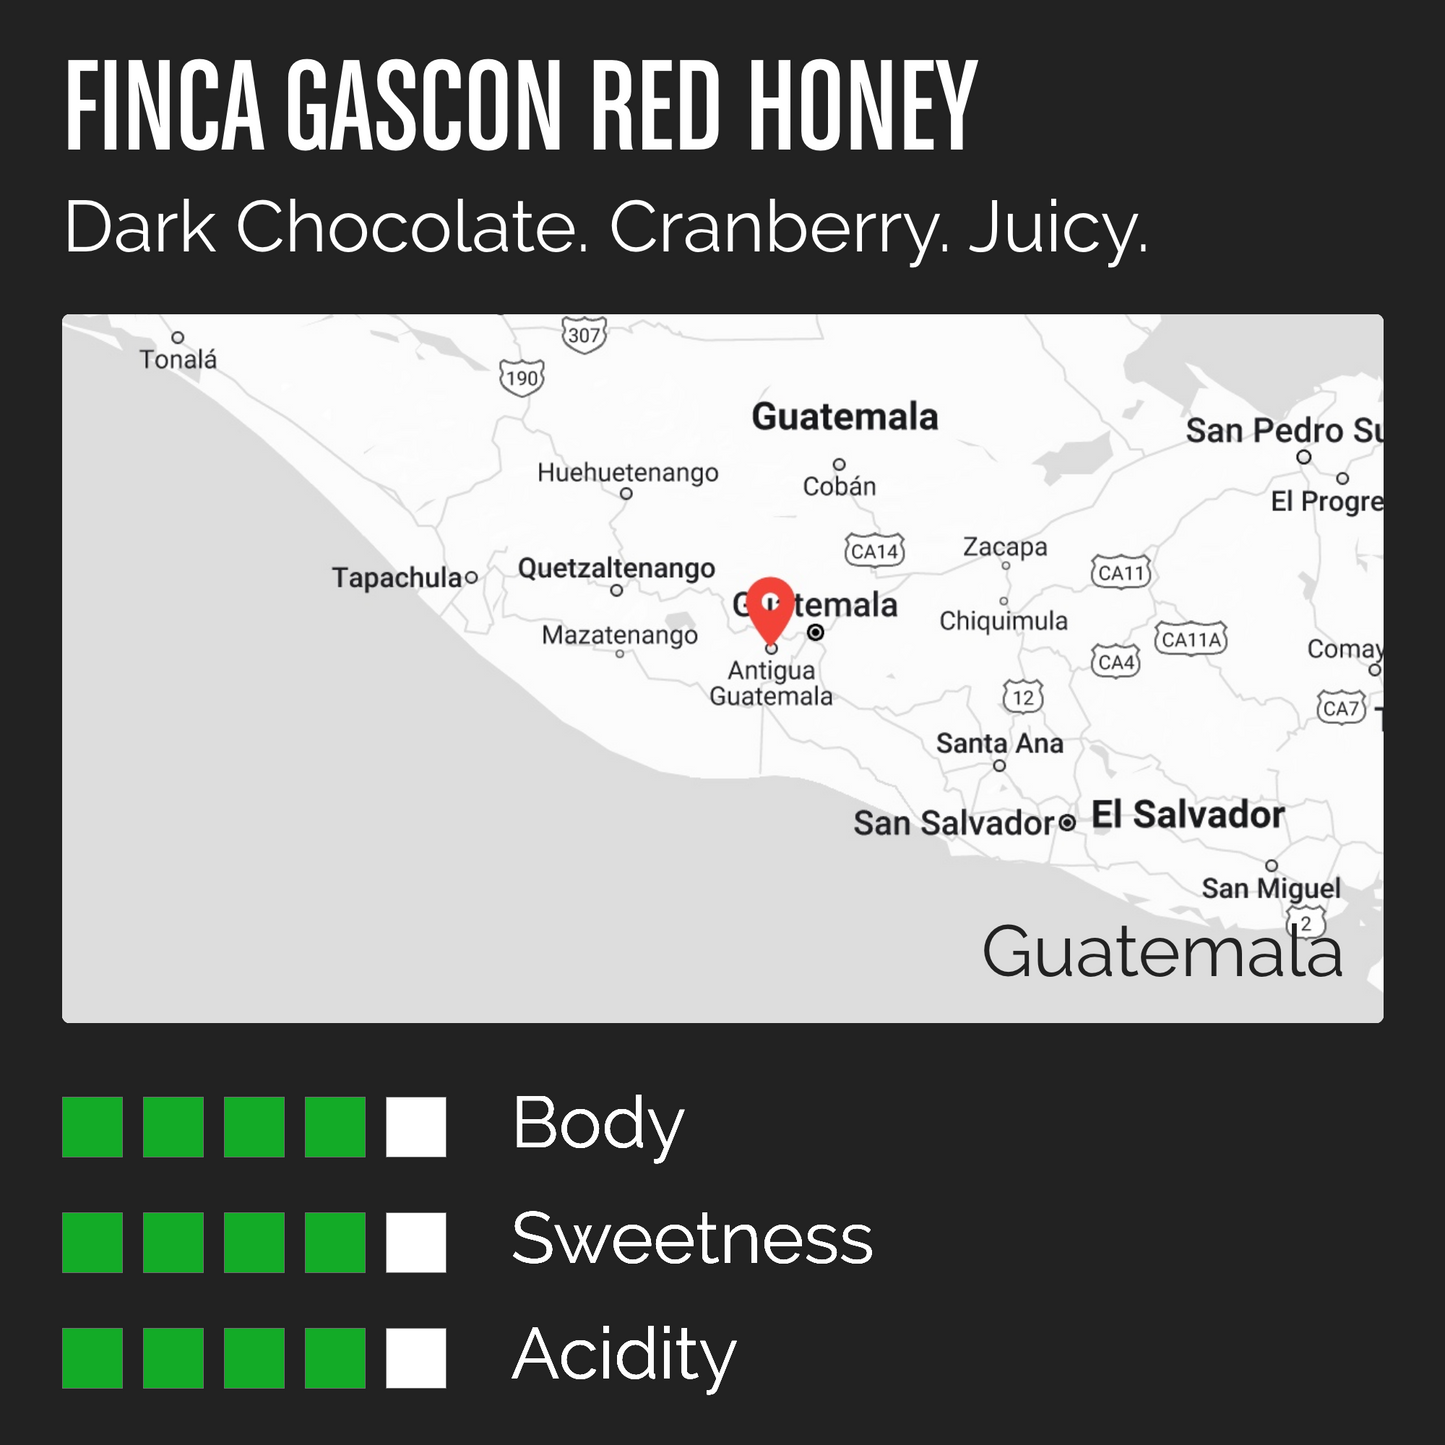 FINCA GASCON RED HONEY